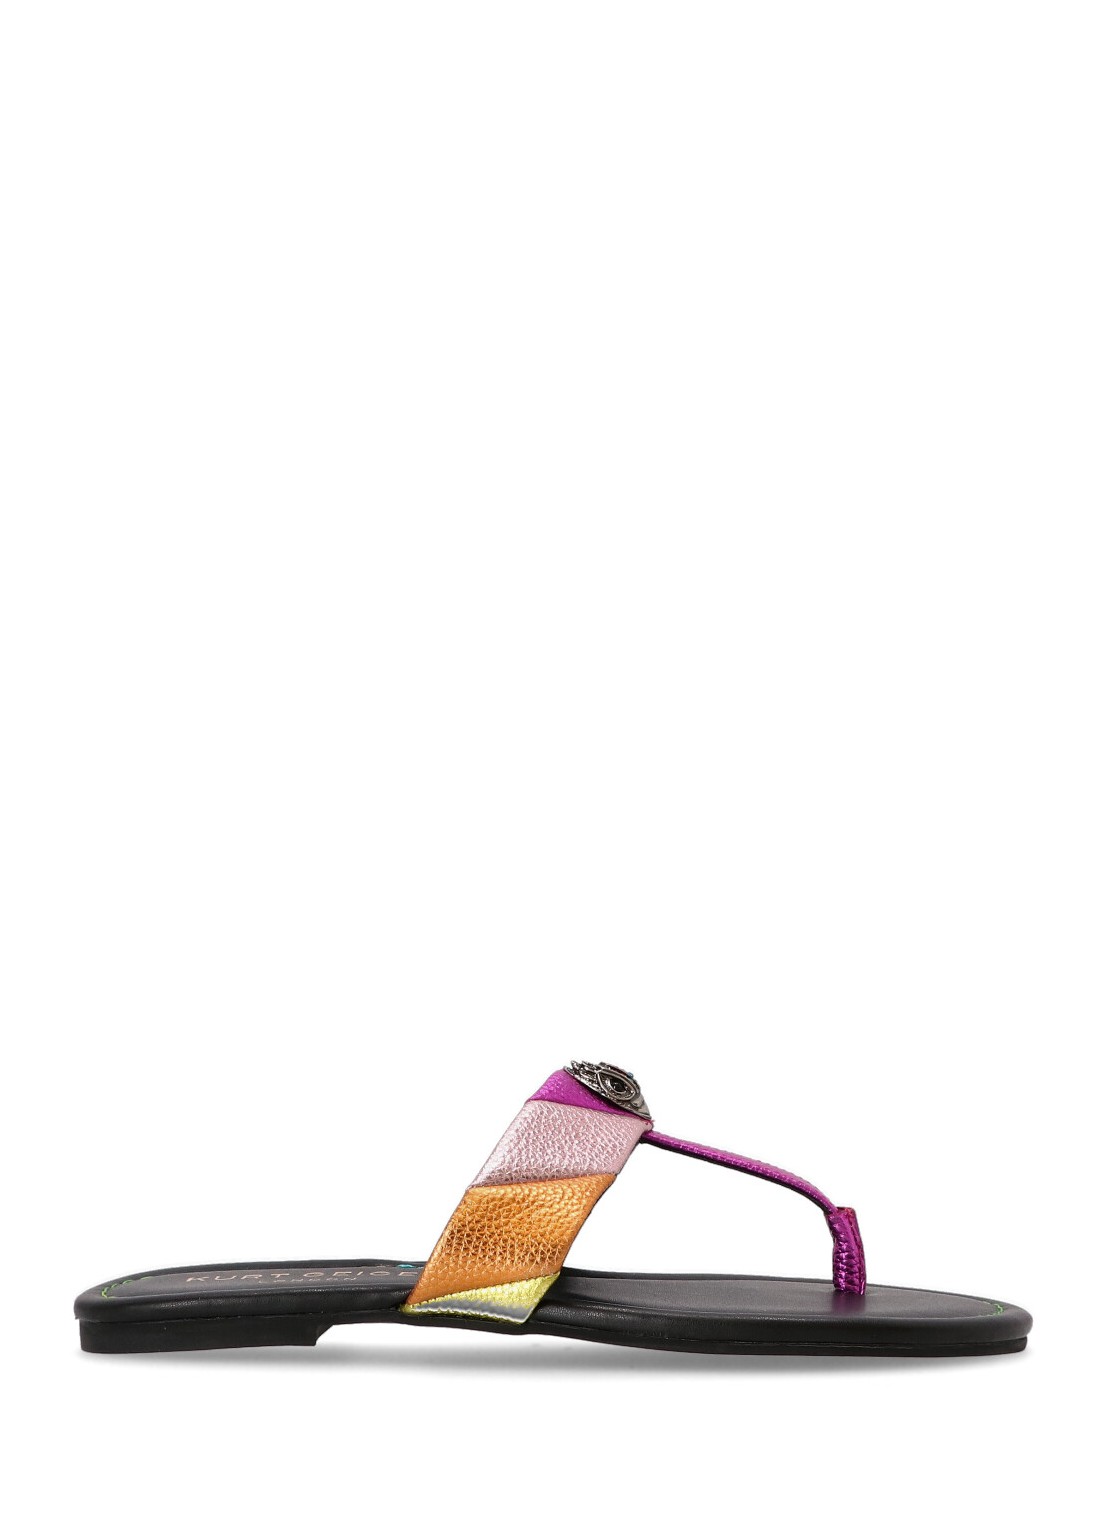 Sandalia kurt geiger sandal woman kensington t-bar sandal 8651469109 69 talla multi
 